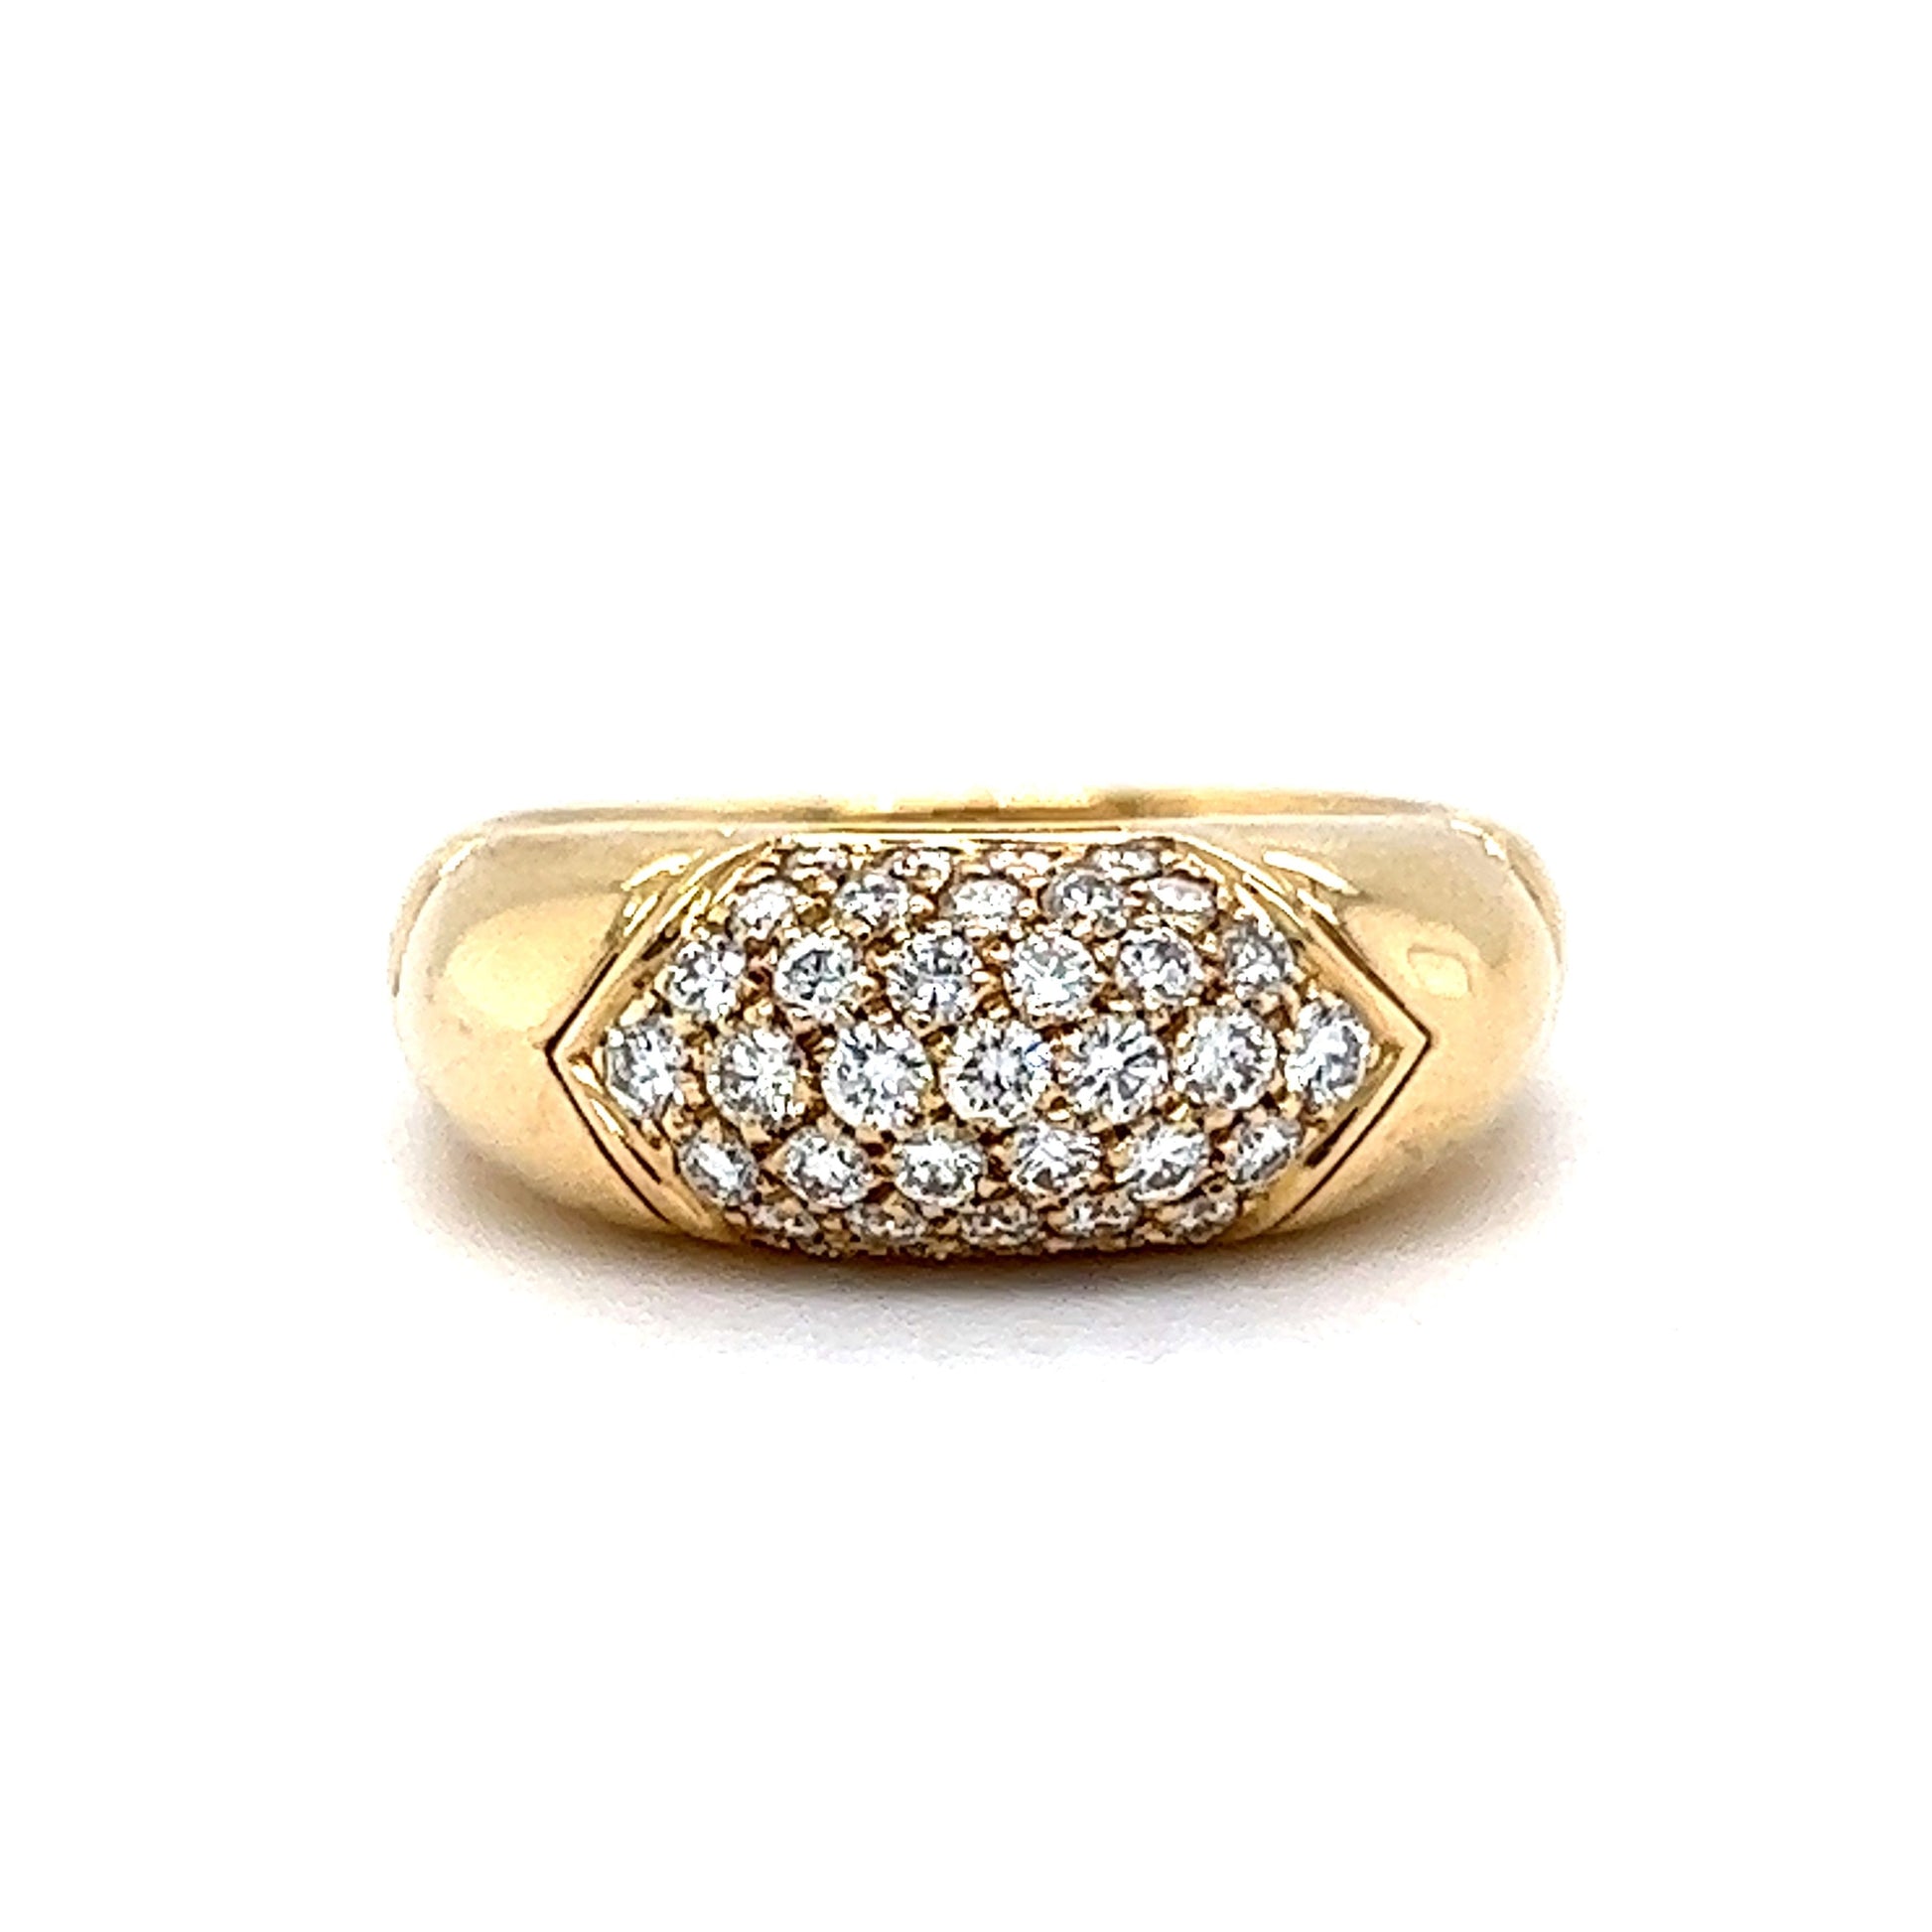 Bulgari Tronchetto Pave Diamond Ring in 18k Yellow Gold